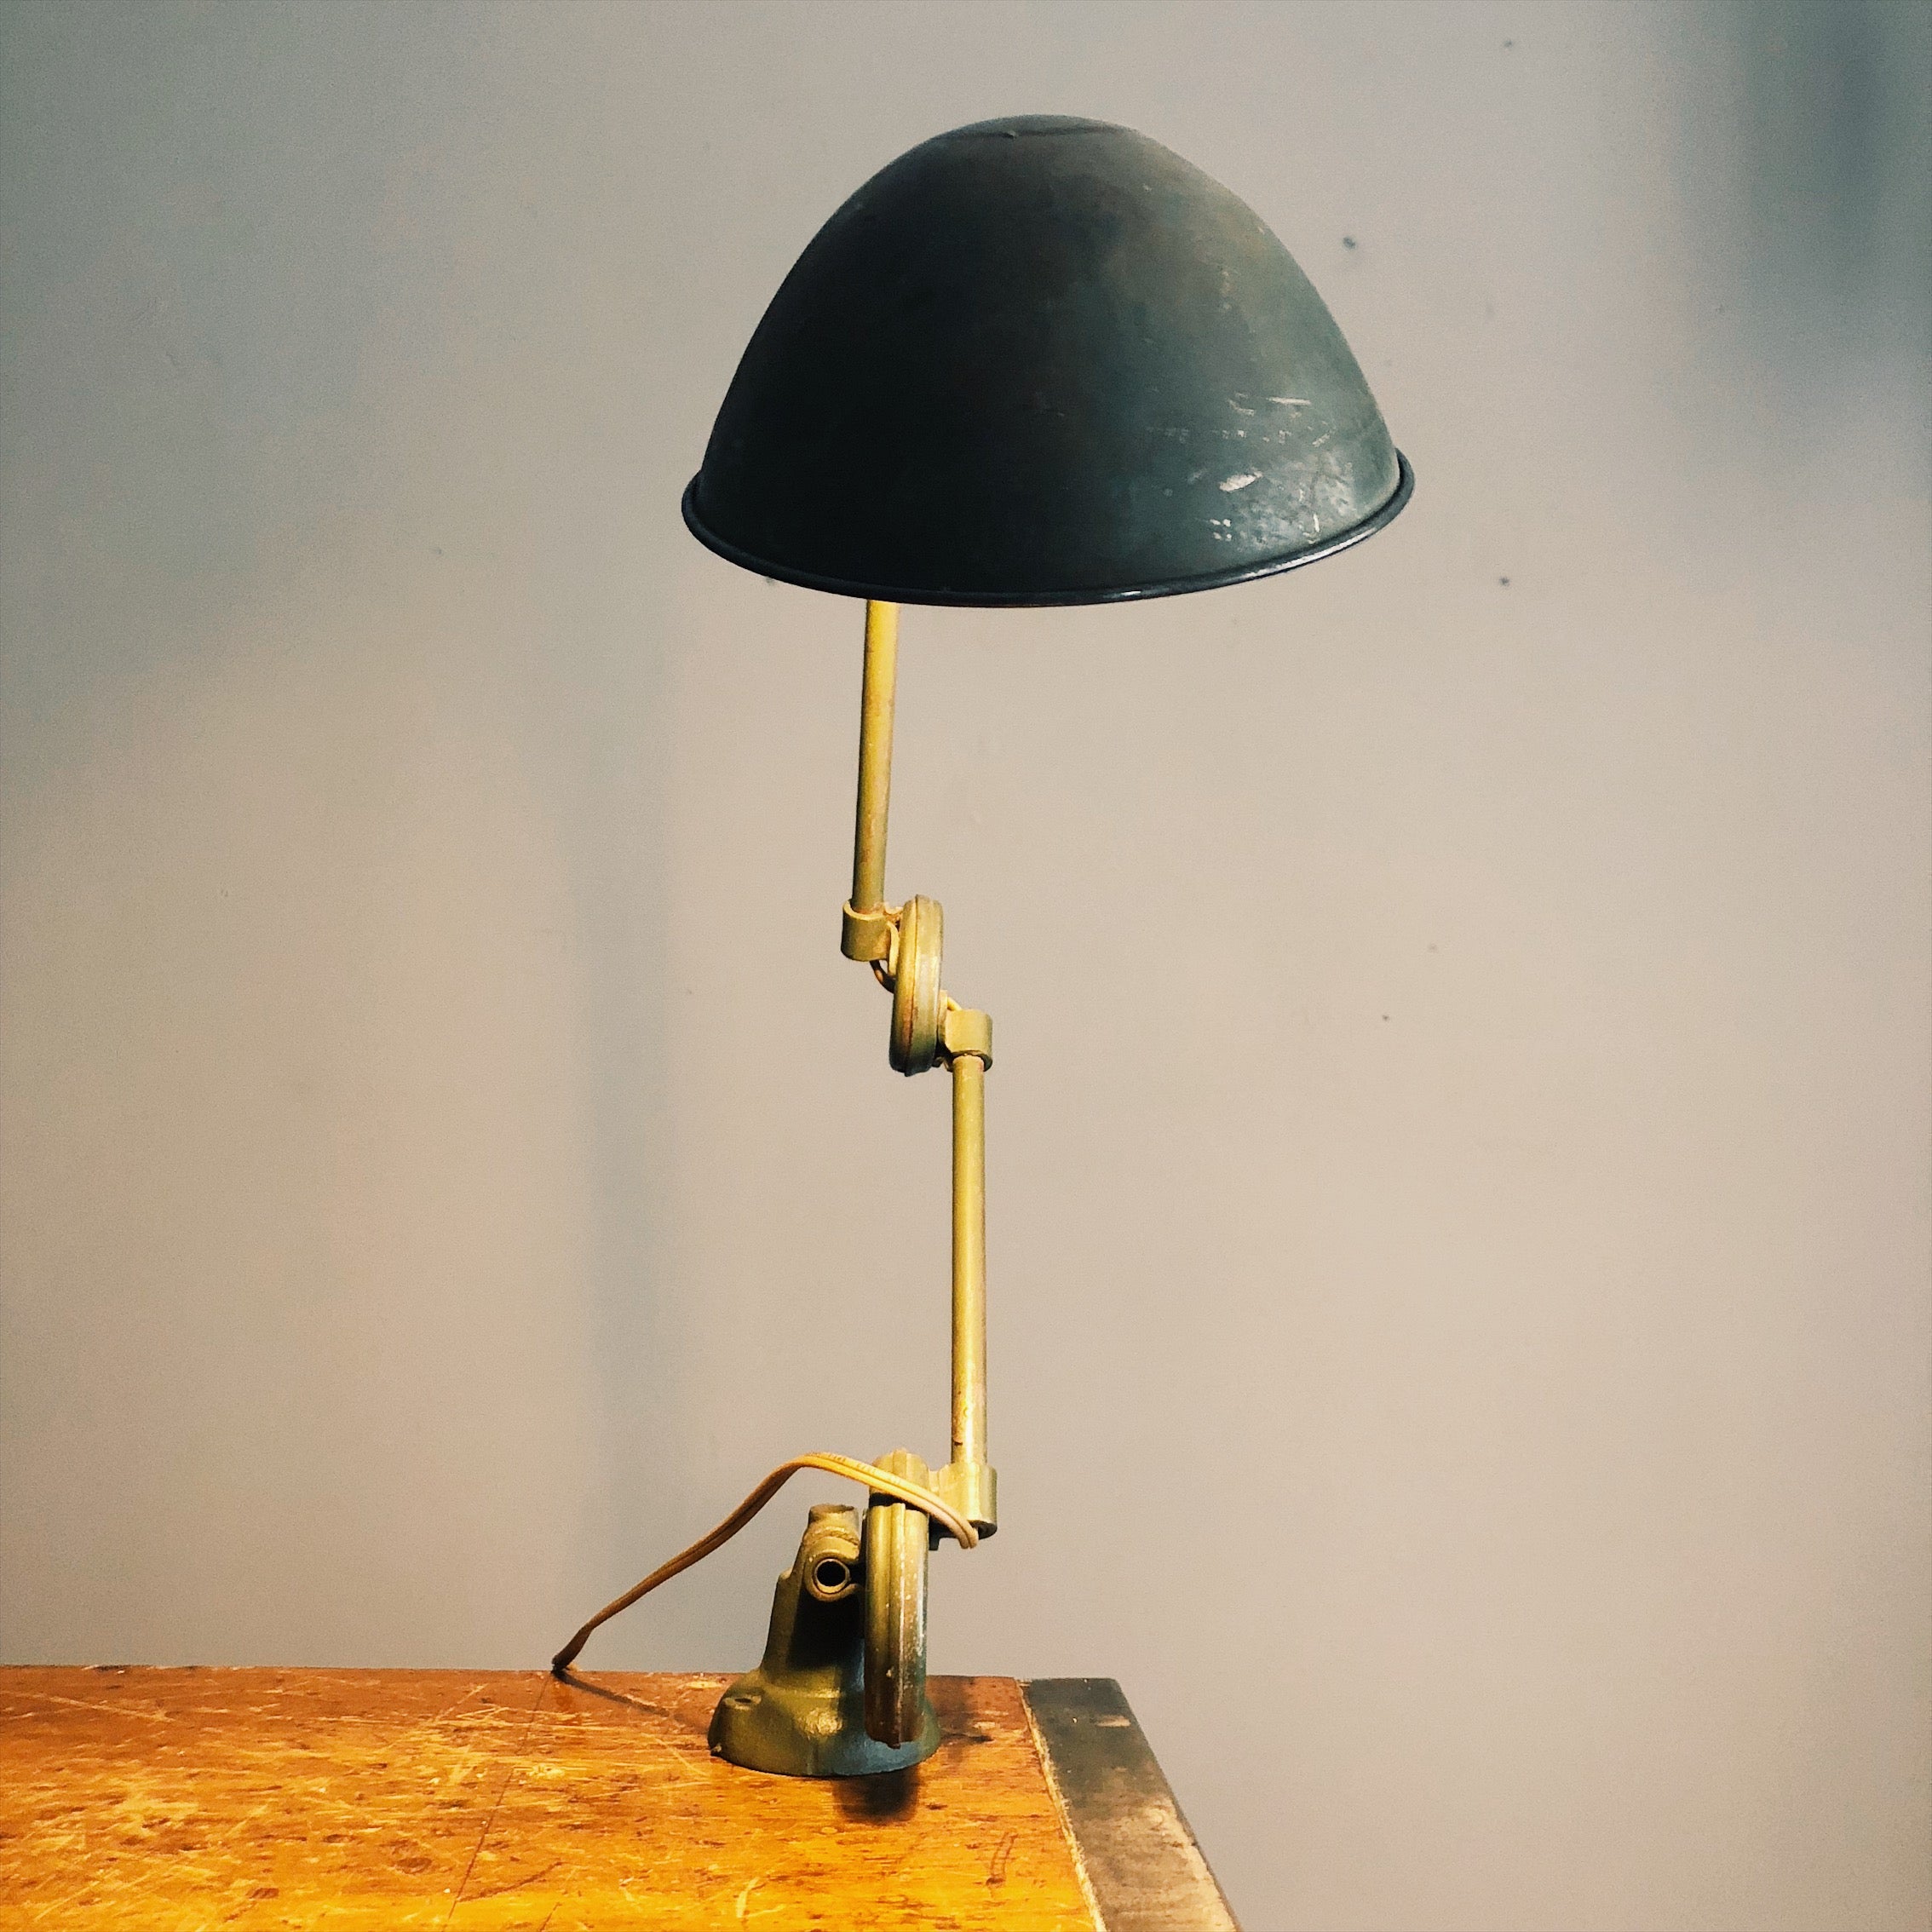 Antique Edon Esrobert Clamp Light from 1930s